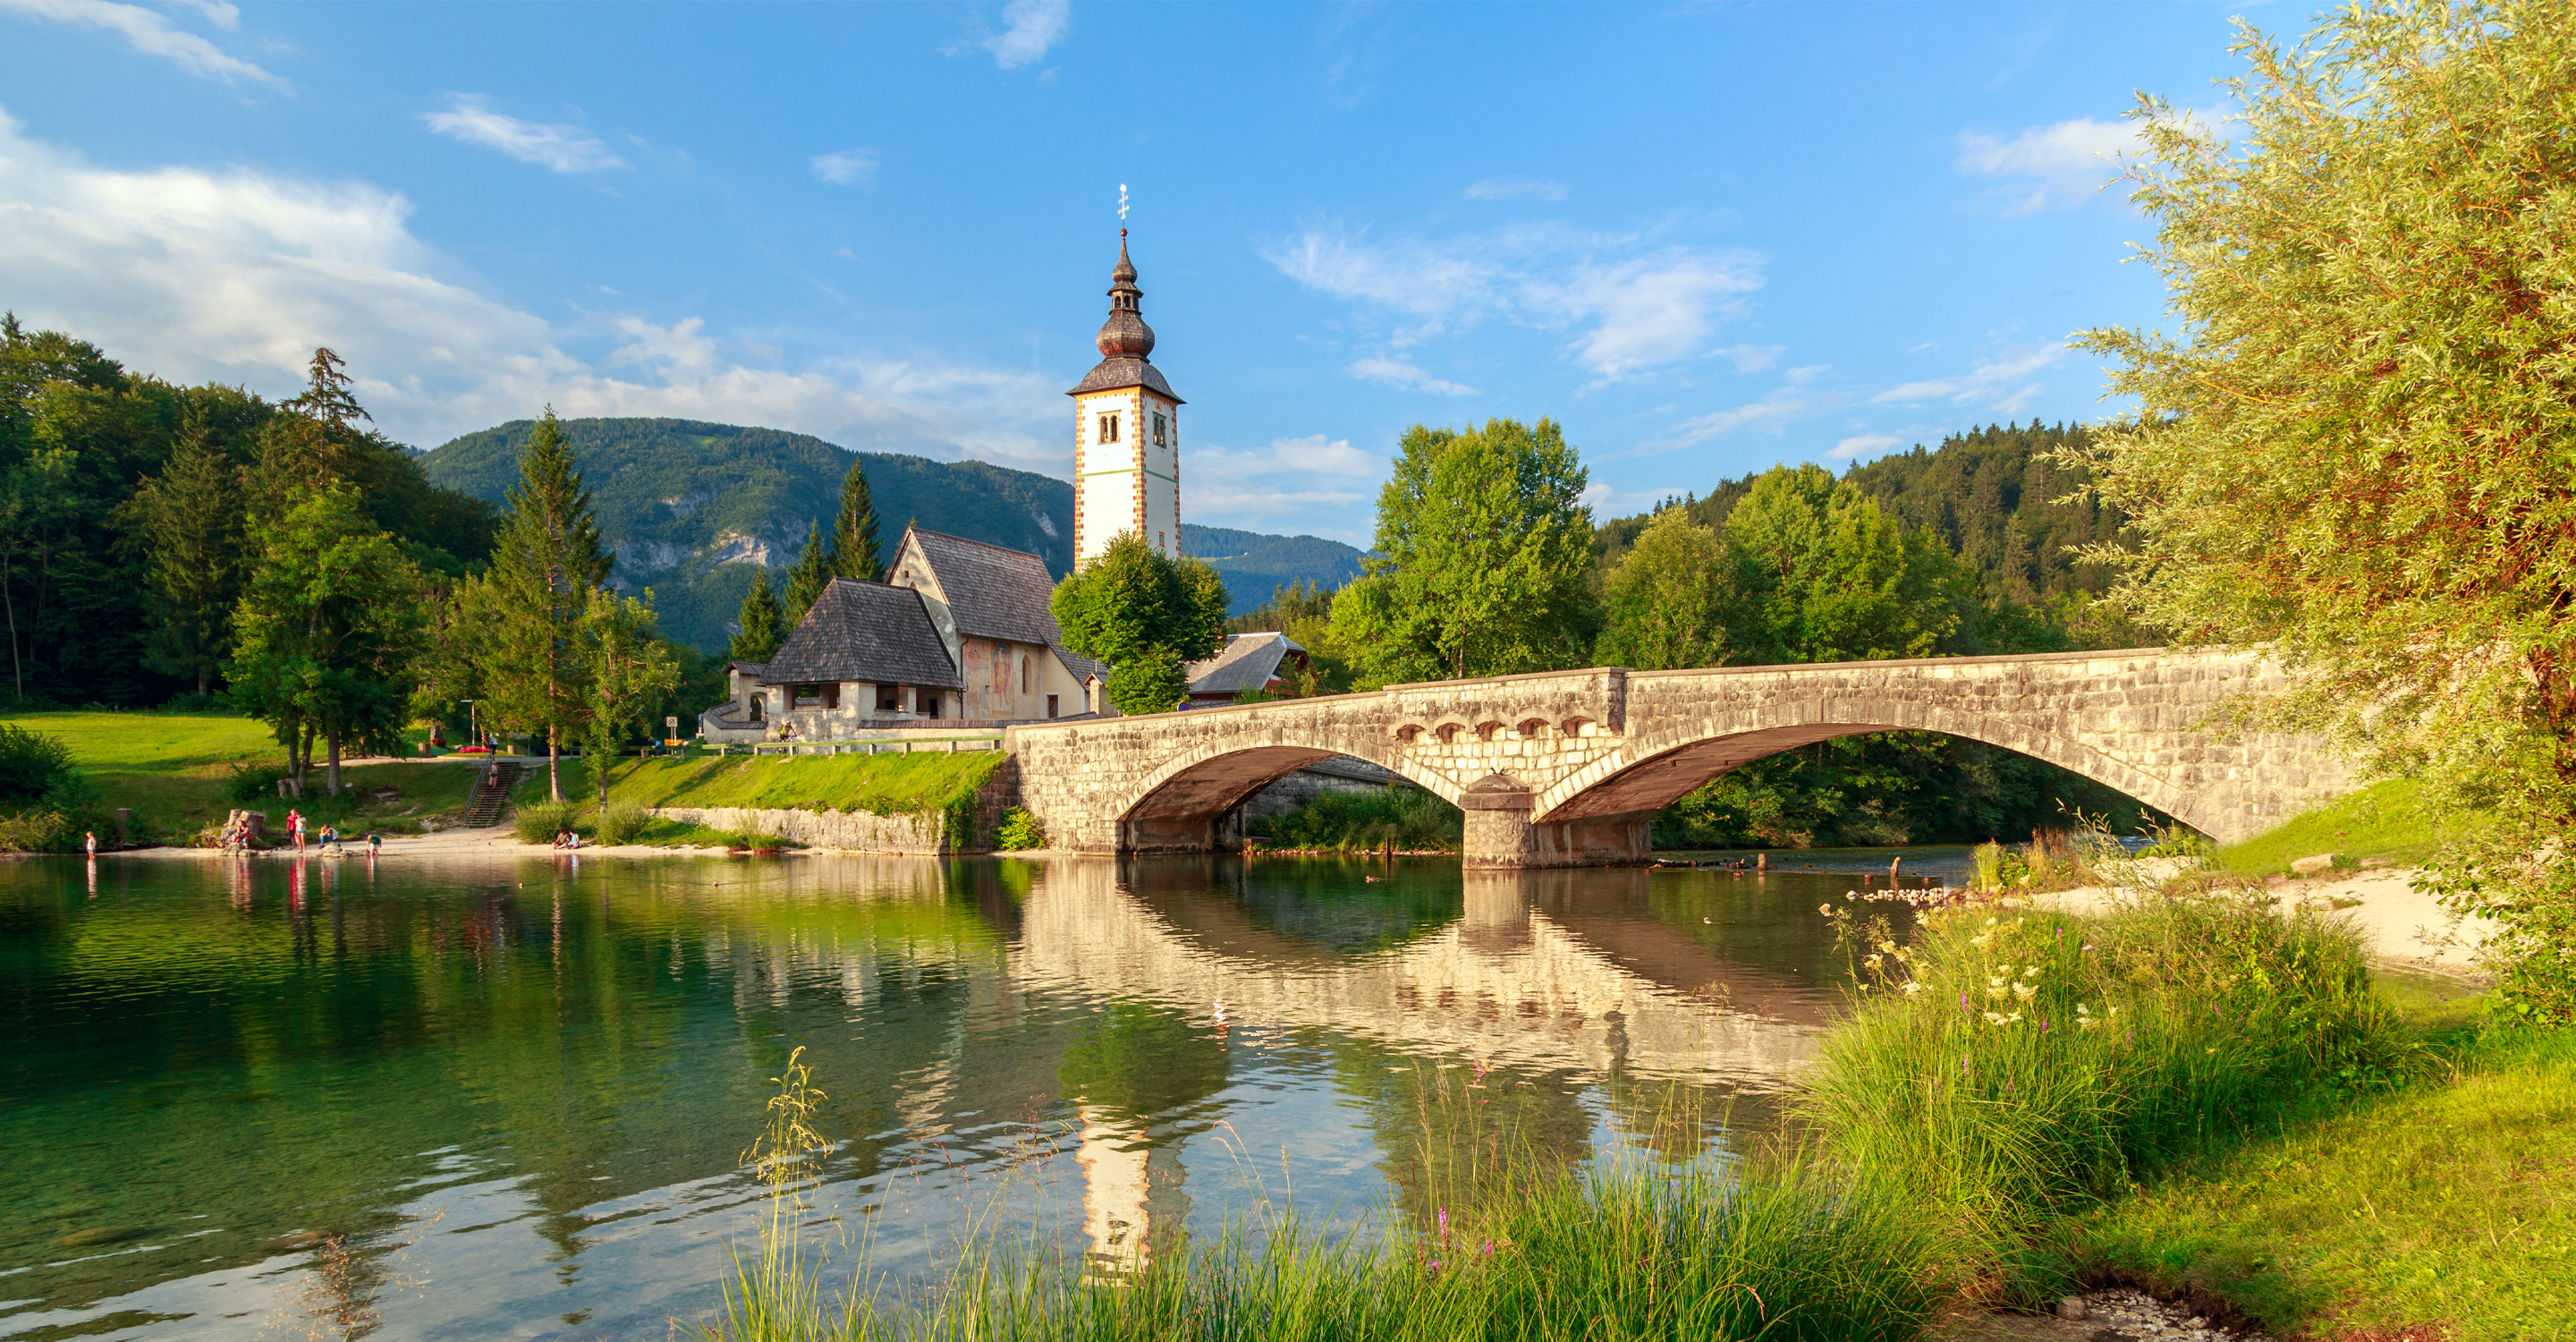 Church of Saint John the Baptist with a bridge over Bohinj Lake, Slovenia